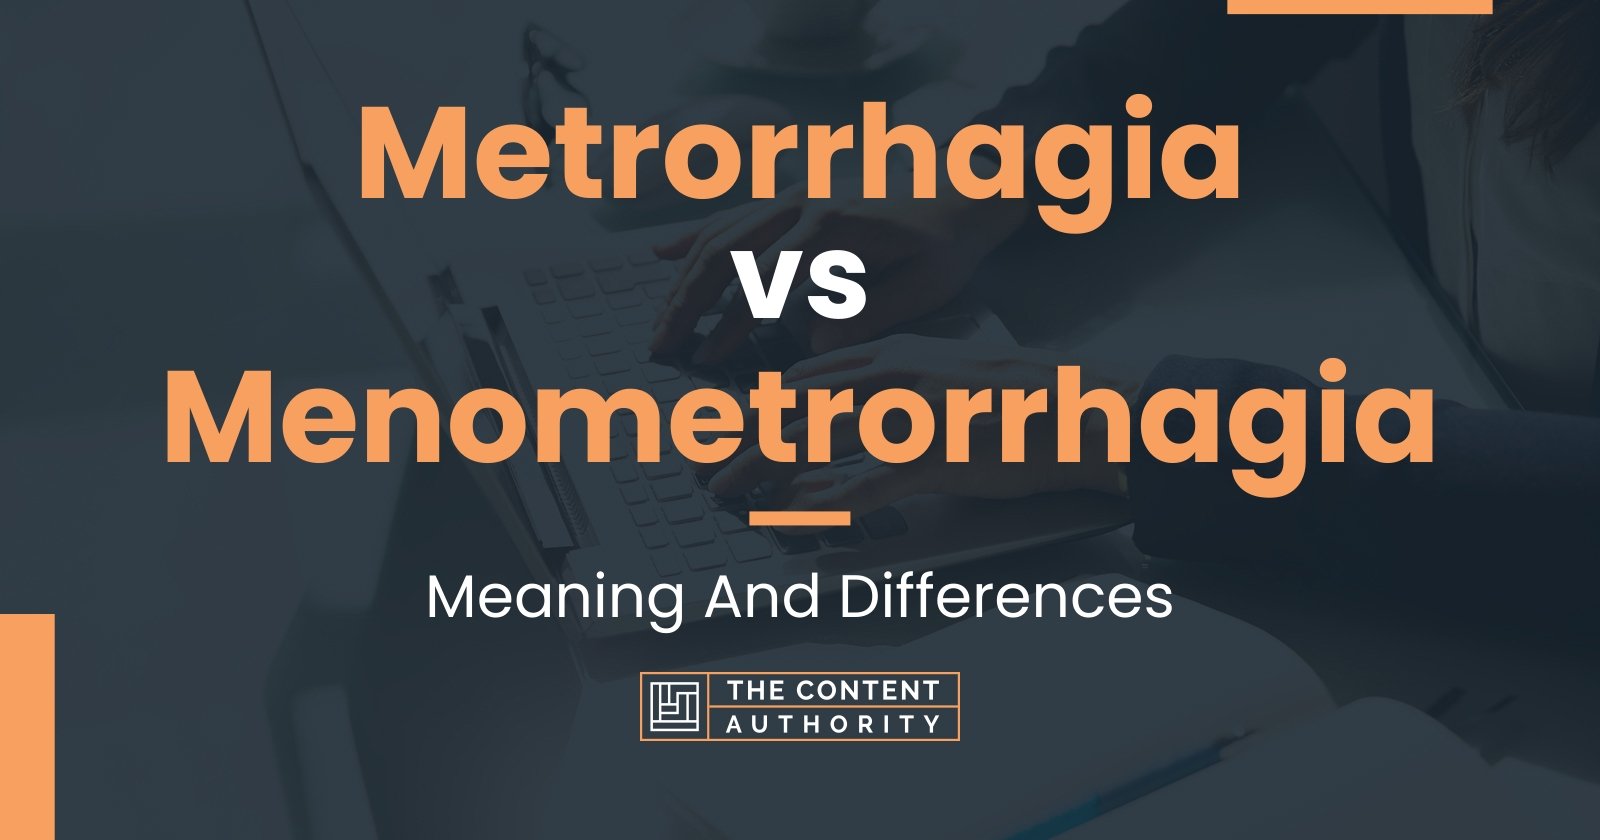 Metrorrhagia vs Menometrorrhagia: Meaning And Differences